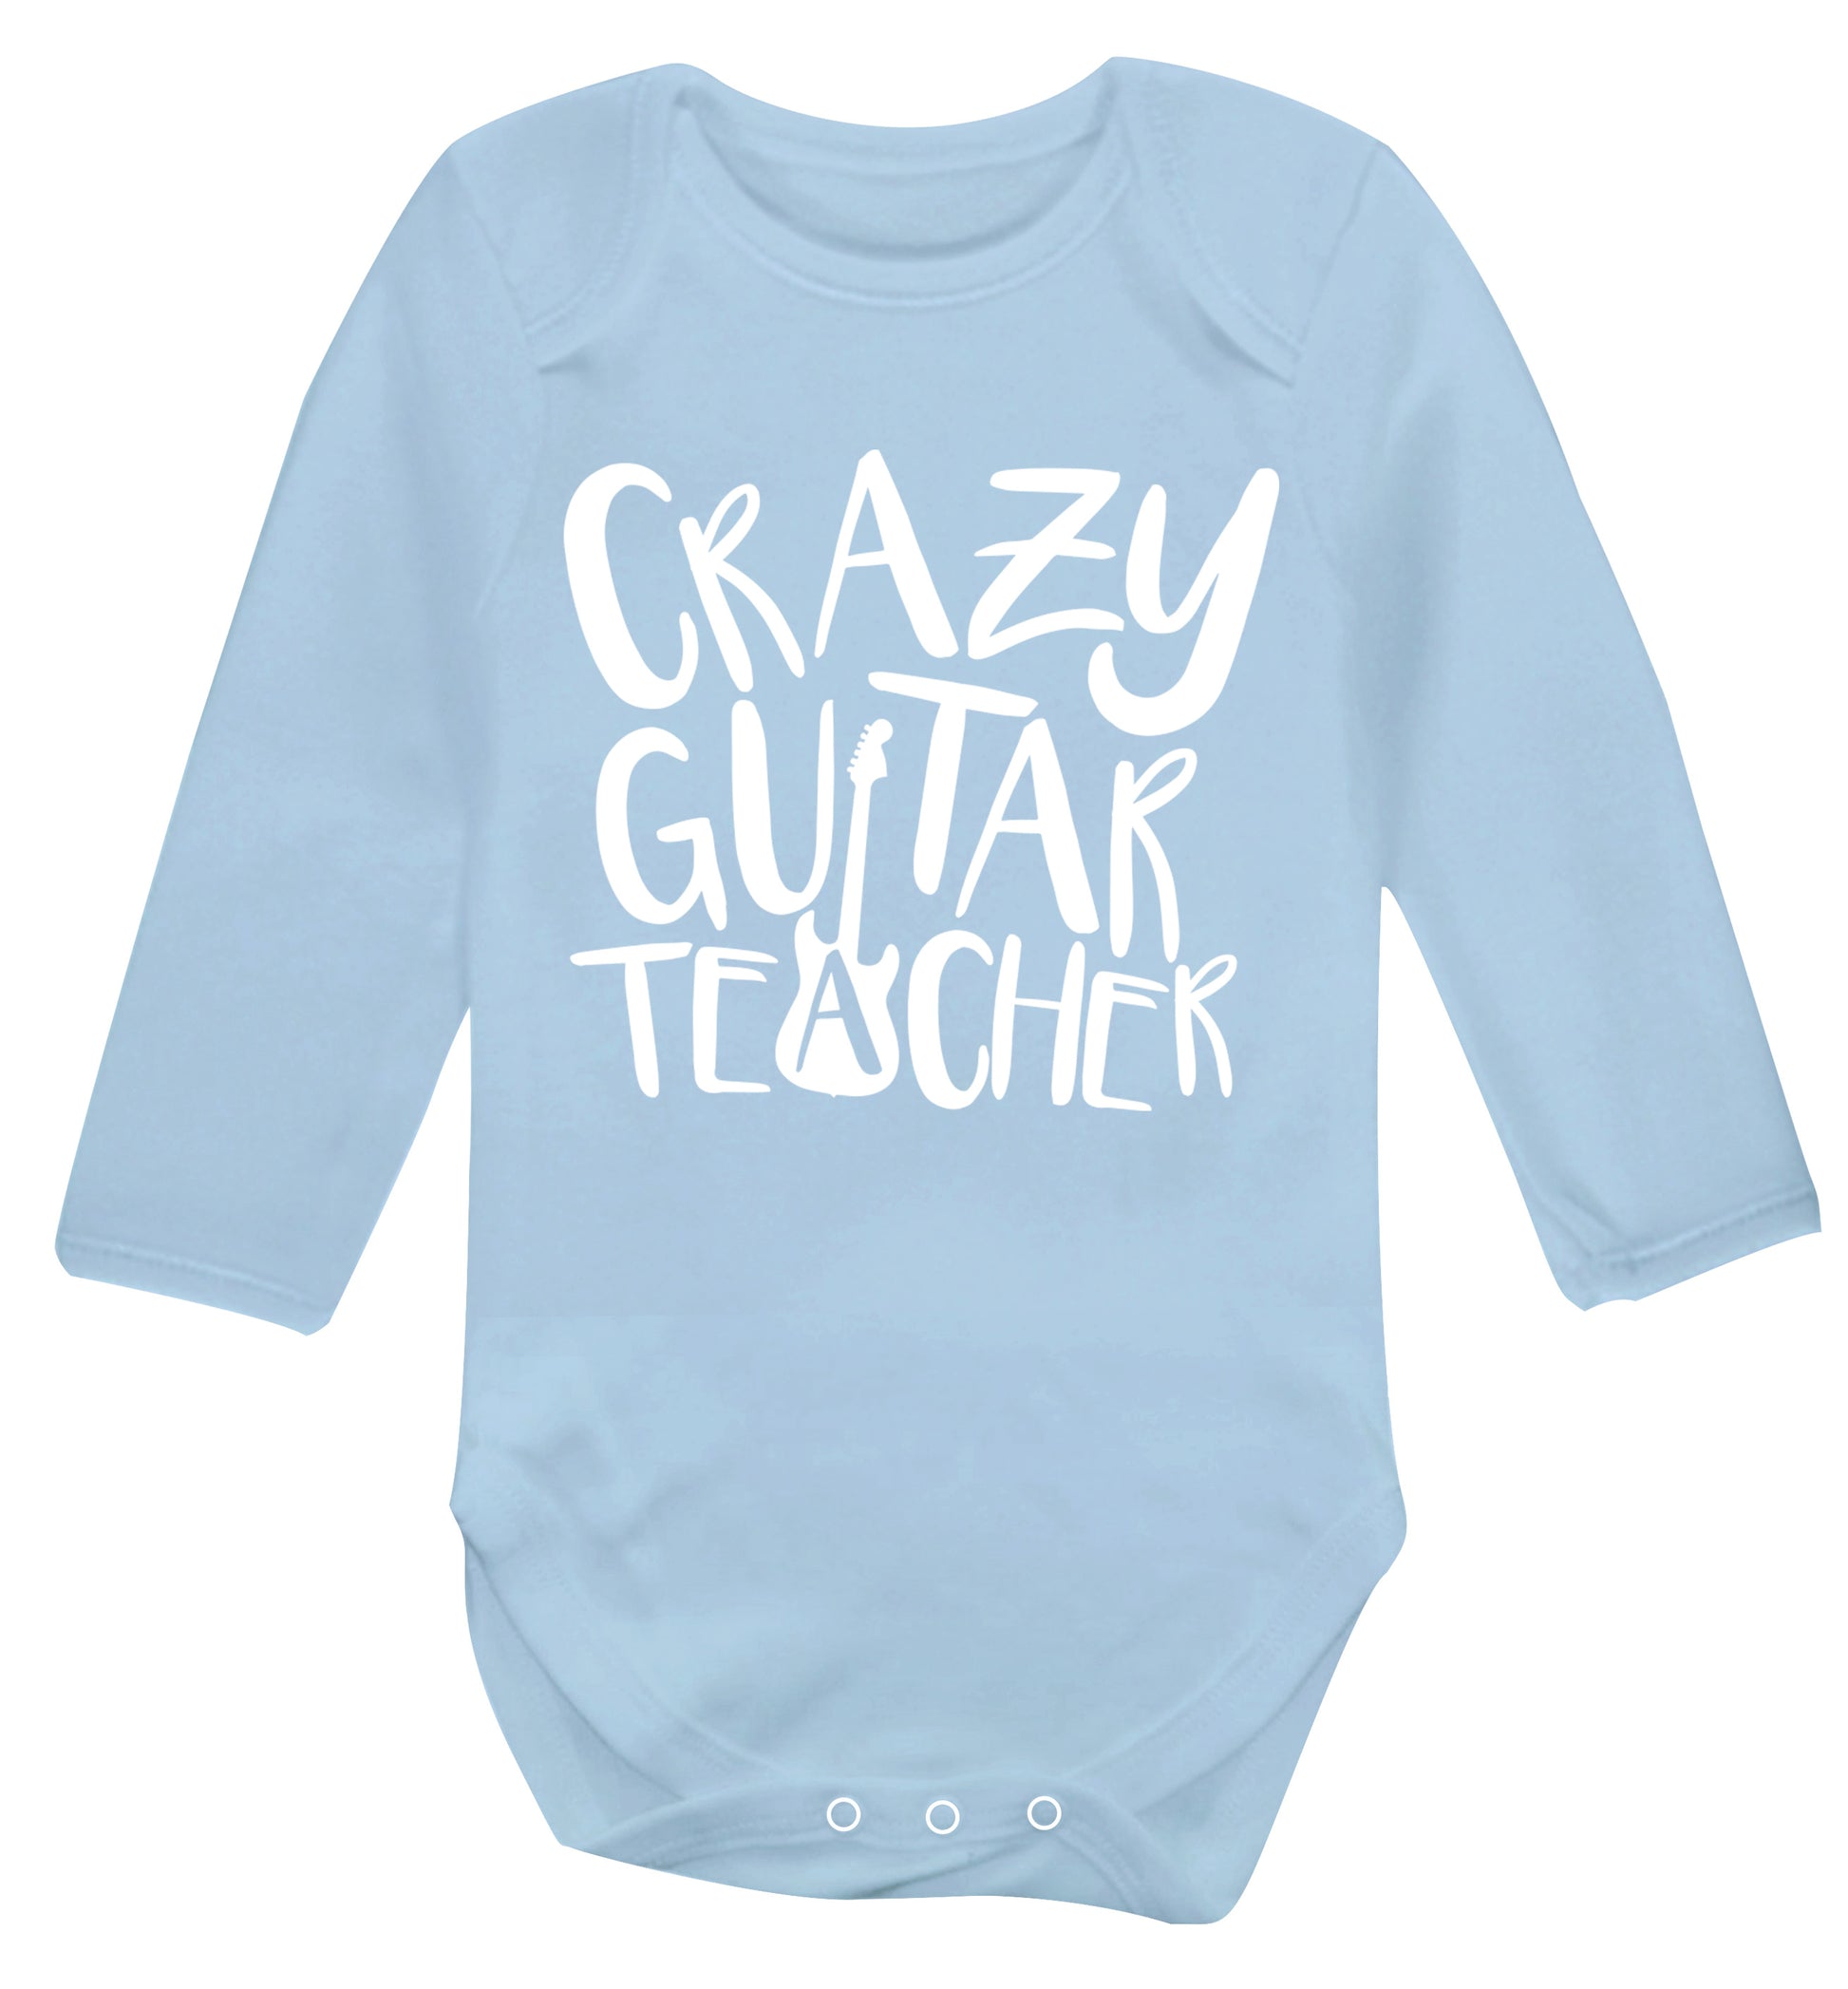 Crazy guitar teacher Baby Vest long sleeved pale blue 6-12 months